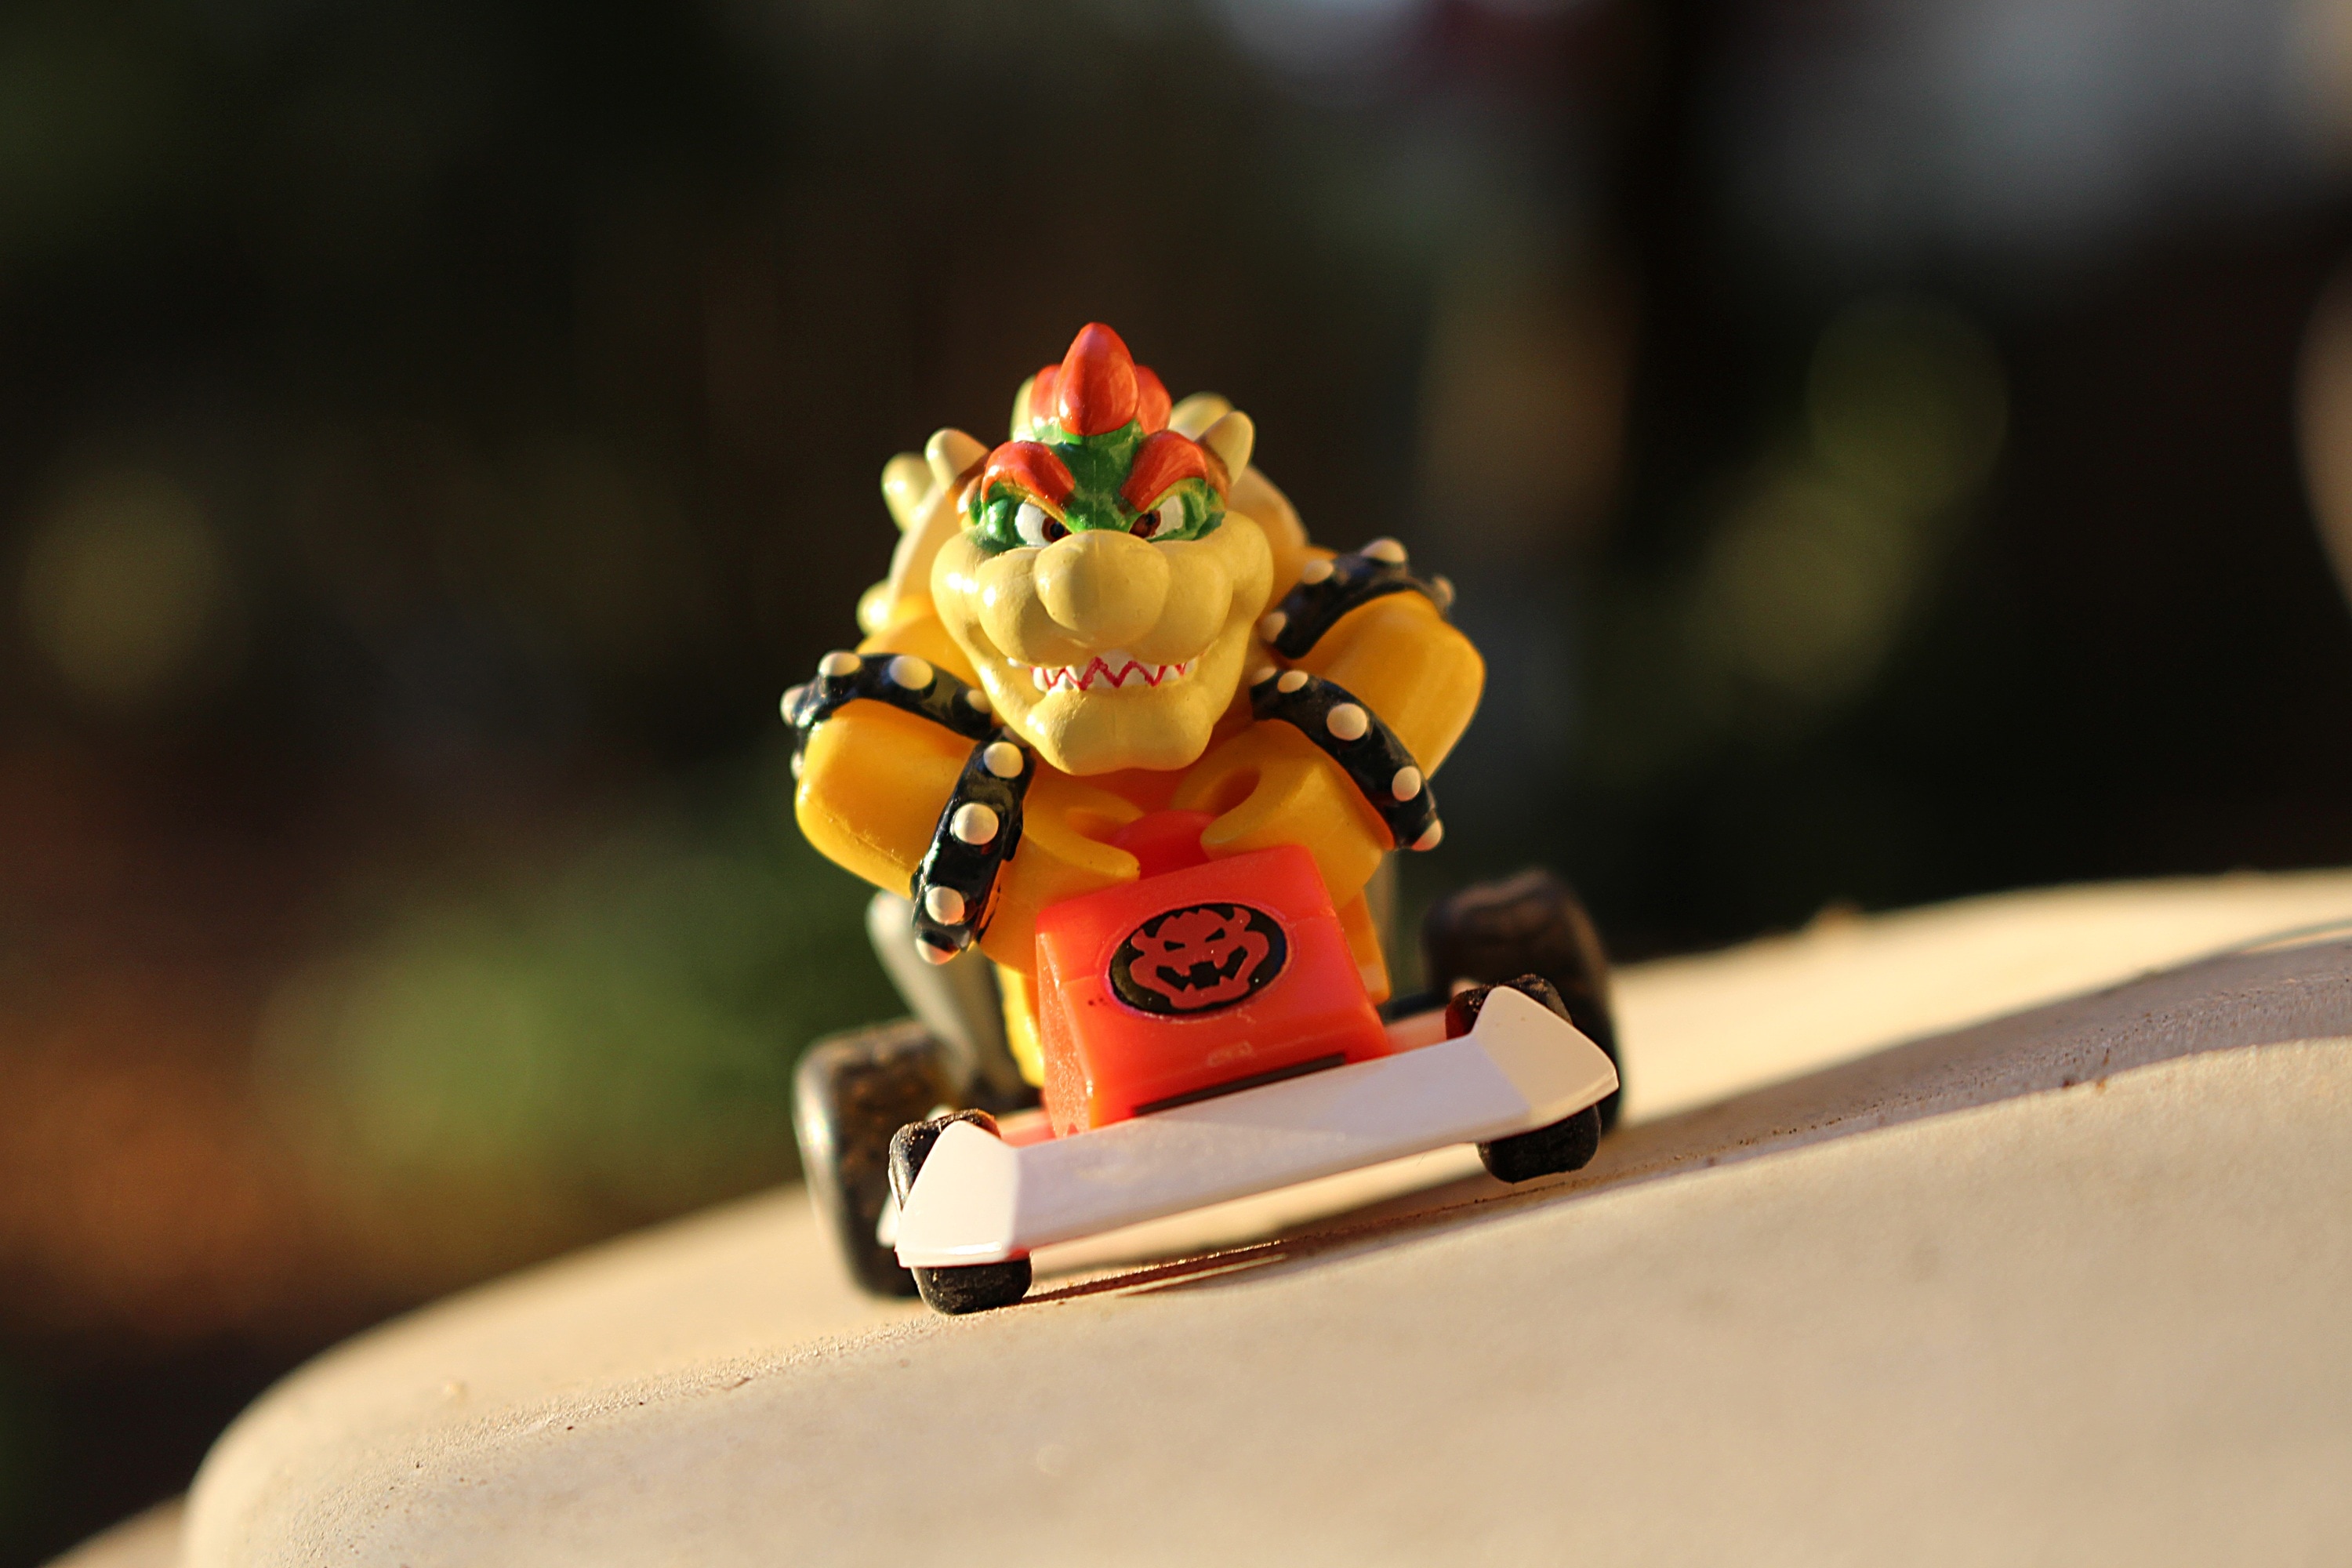 yellow orange and green dragon riding on go kart toy